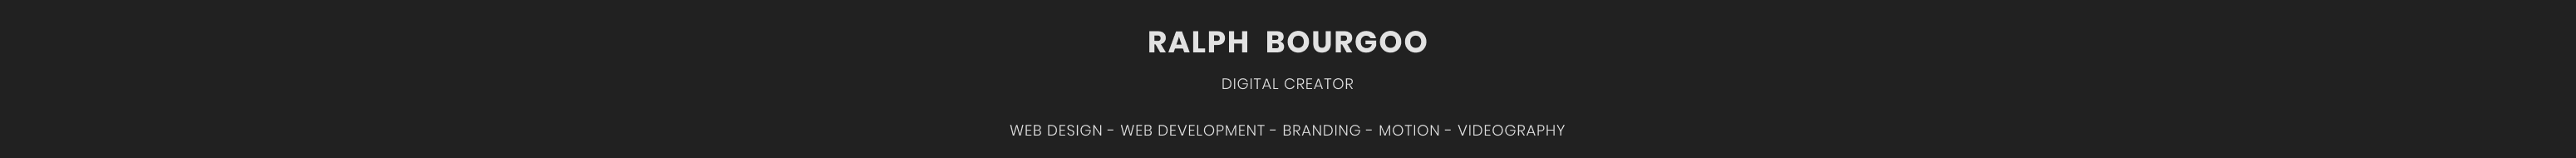 Ralph Bourgoo's profile banner